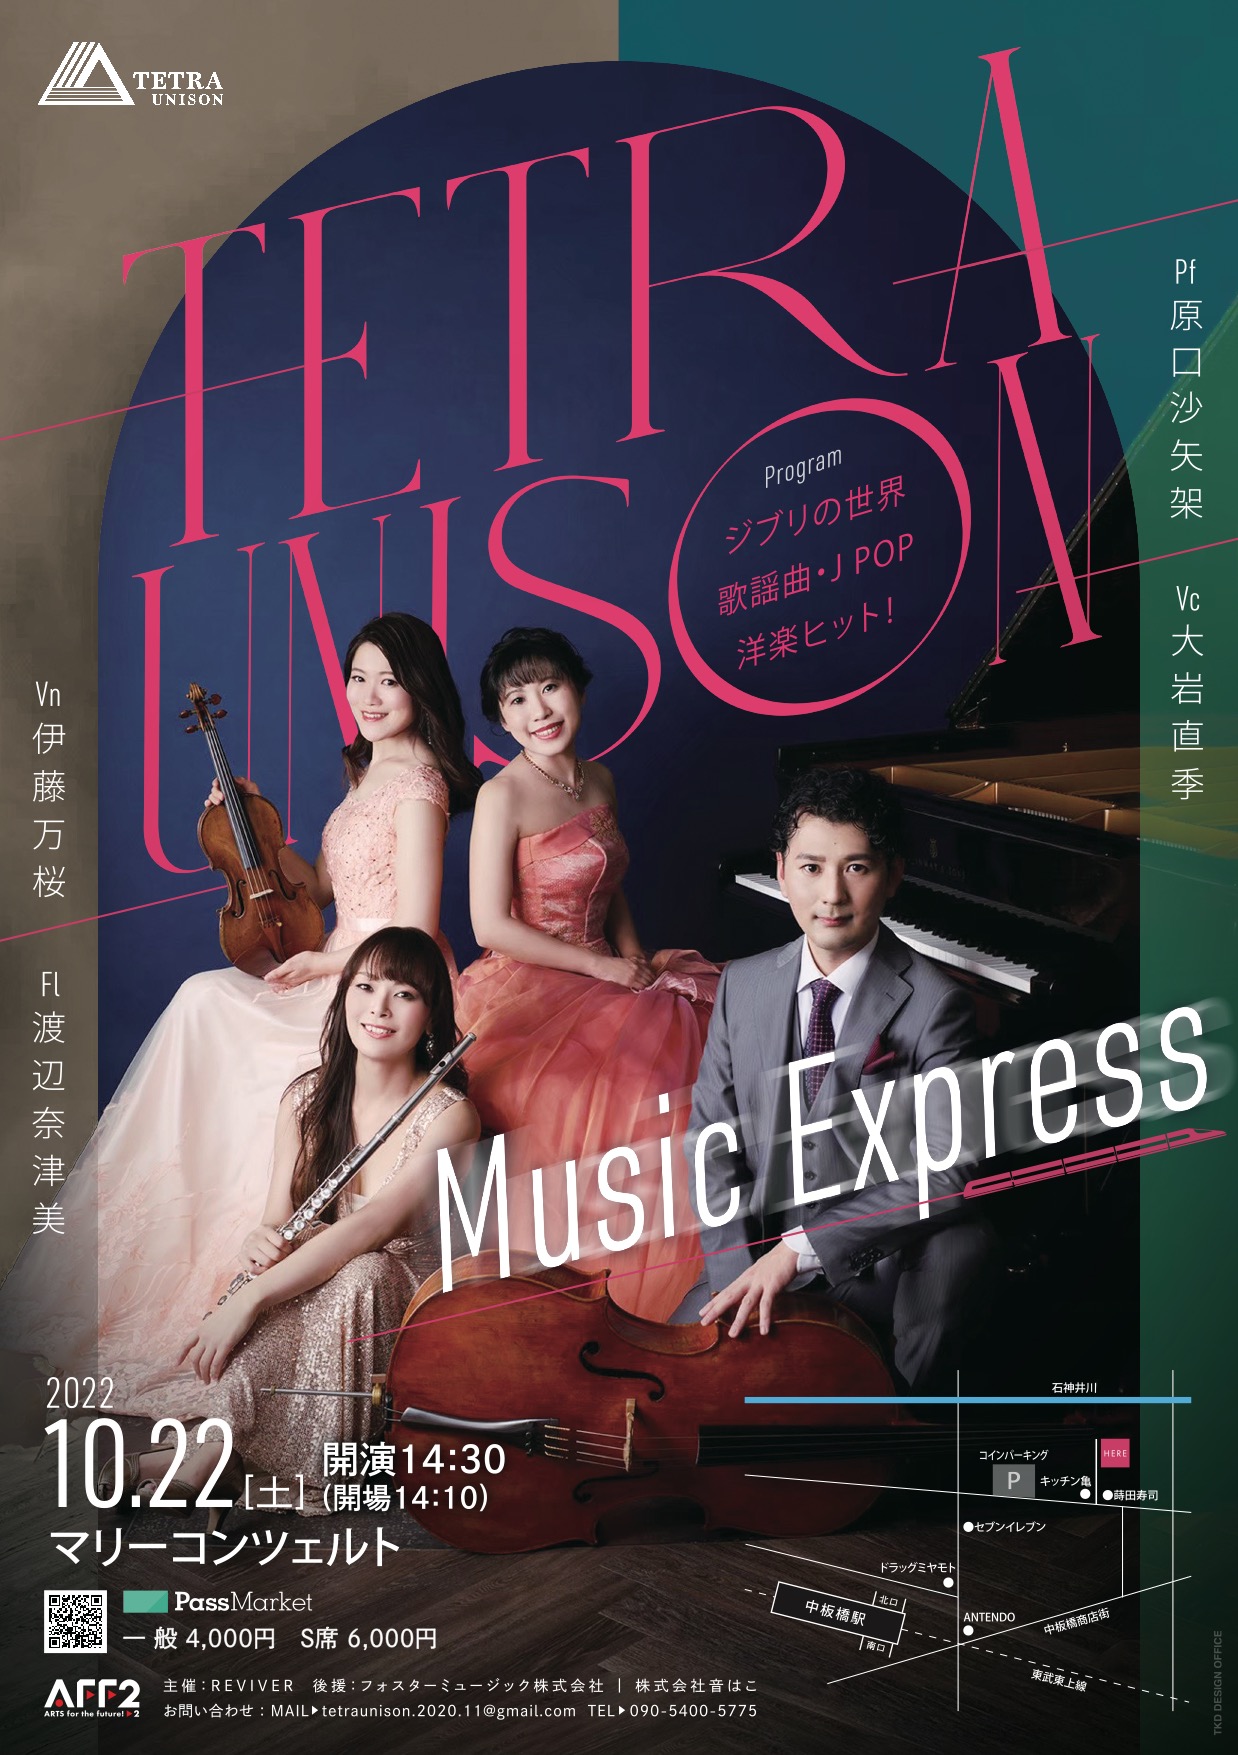 TETRA UNISON Music Express